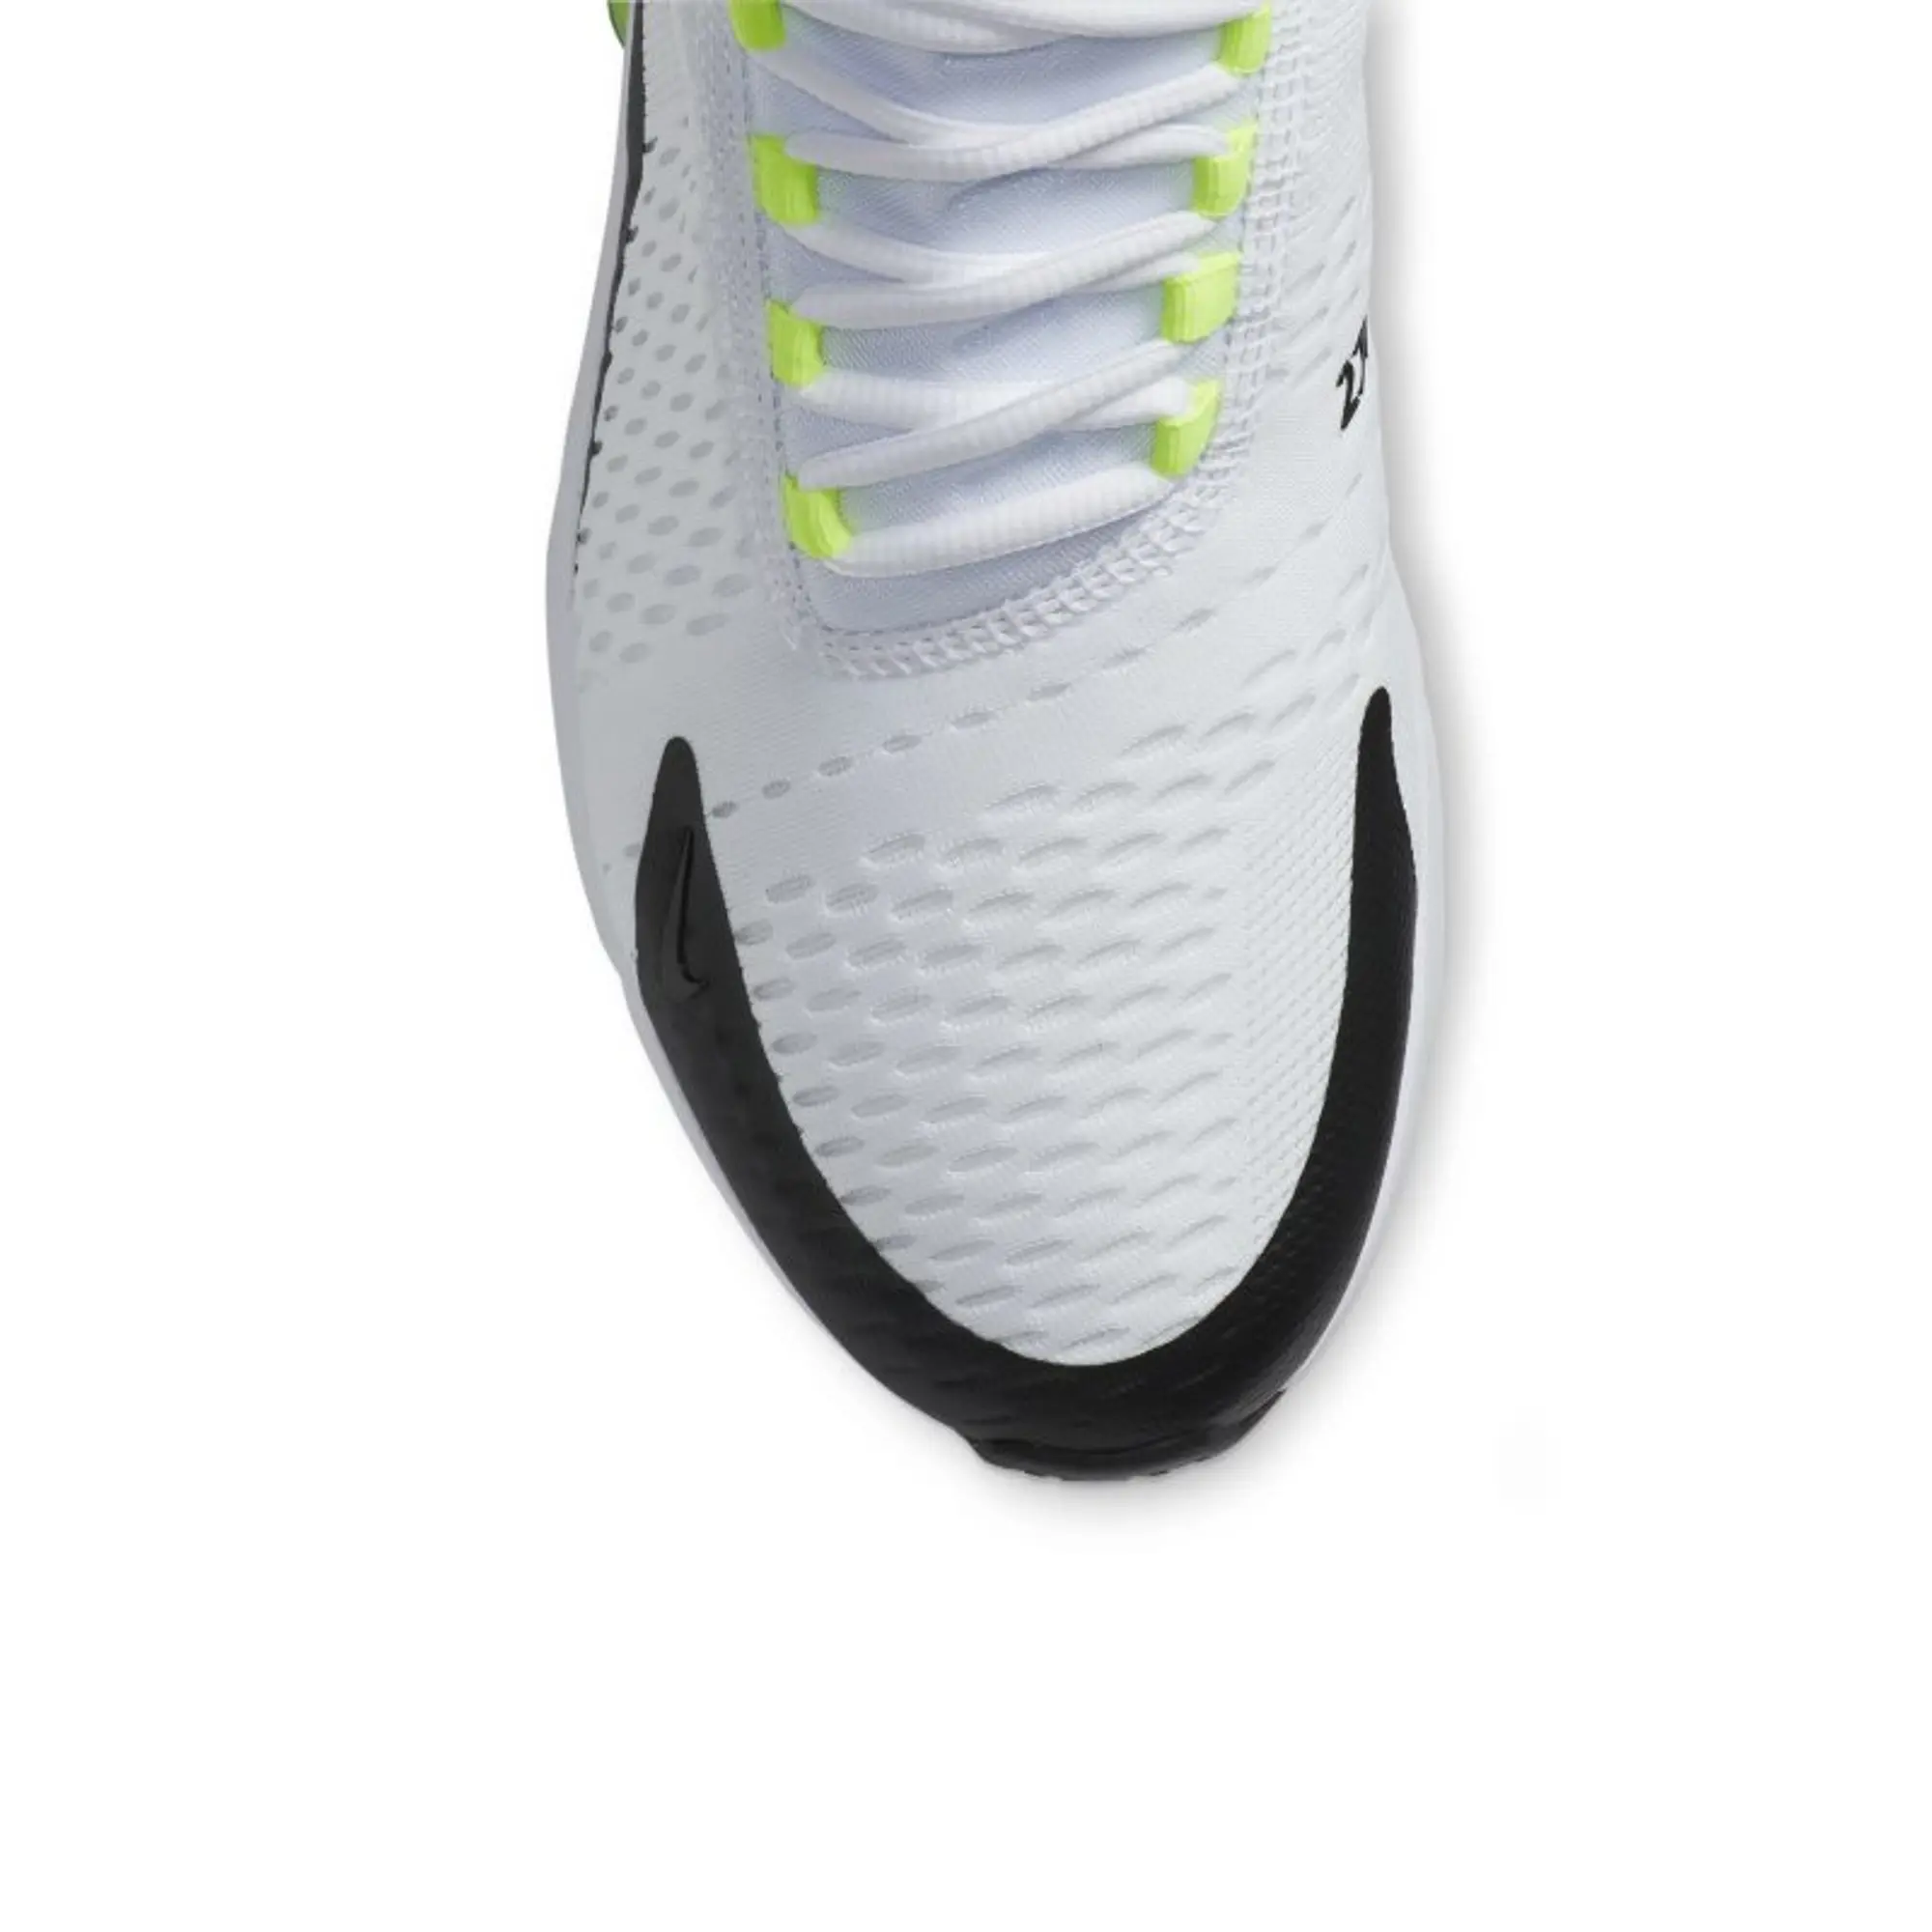 Nike Air Max 270 Trainer - White / Black / Volt